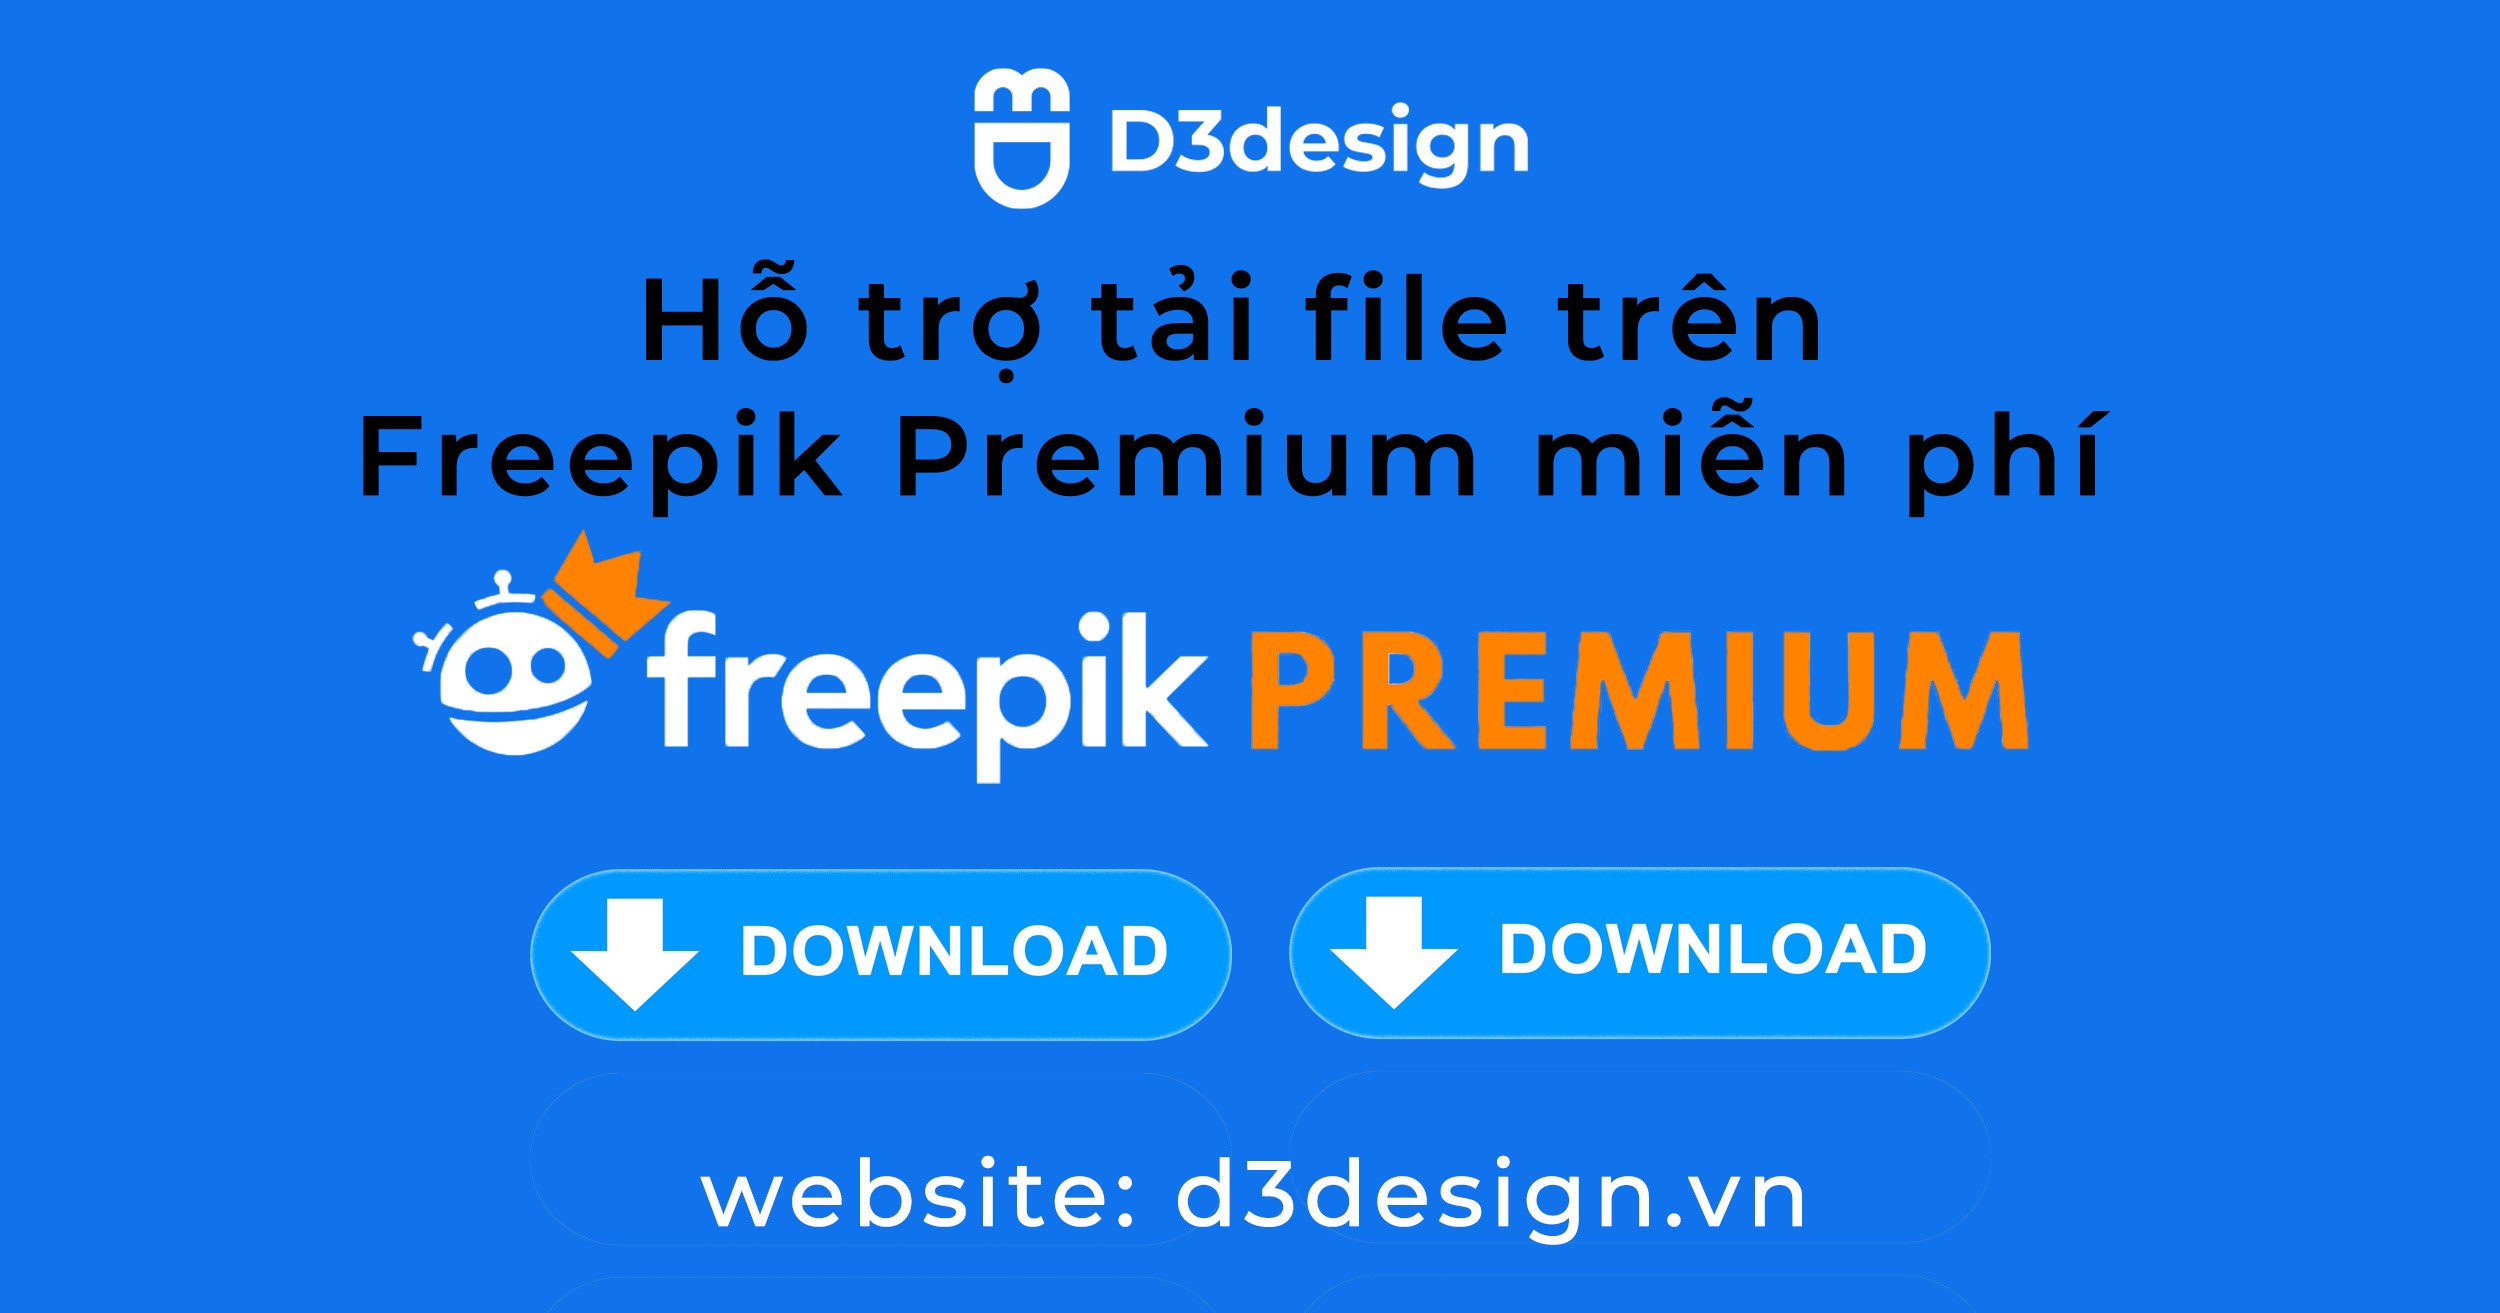 Get file Freepik Premium miễn phí - Tải file Freepik Premium miễn phí